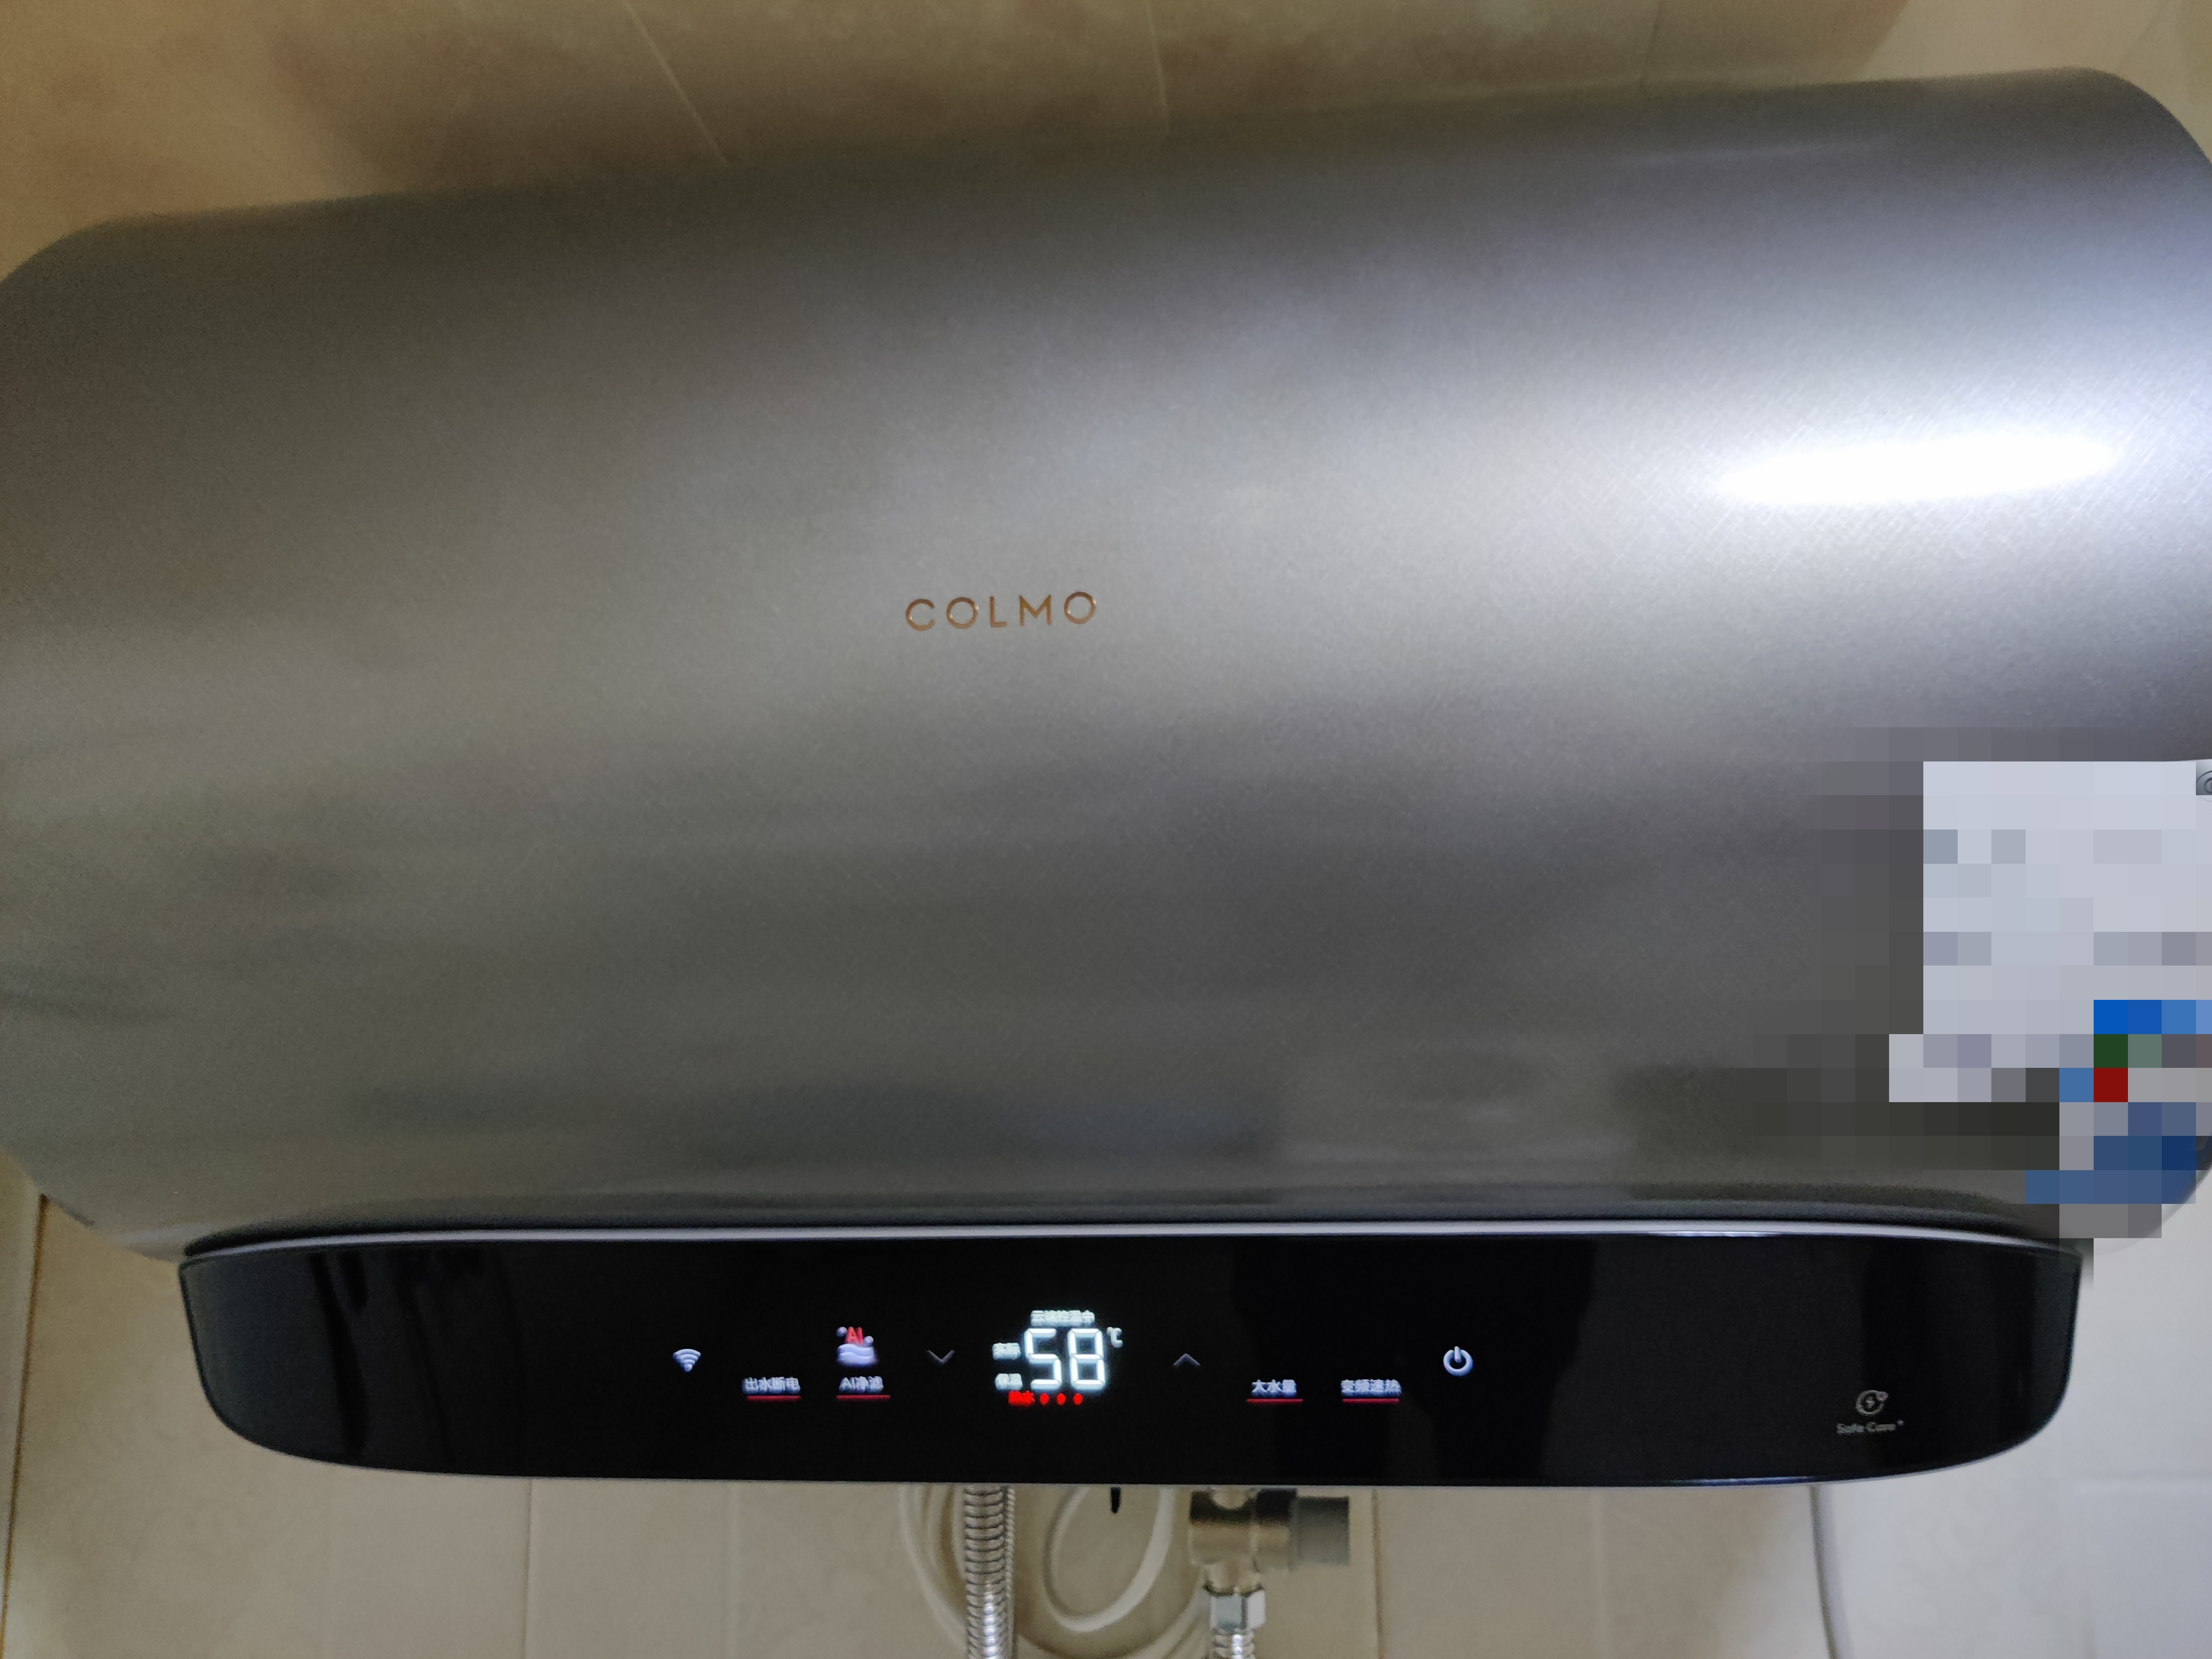 COLMO电热水器CFCV6032 月岩灰星图套系 AI净滤鲜水洗 畅享澎湃鲜活浴 出水断电 无缝内胆电热水器晒单图